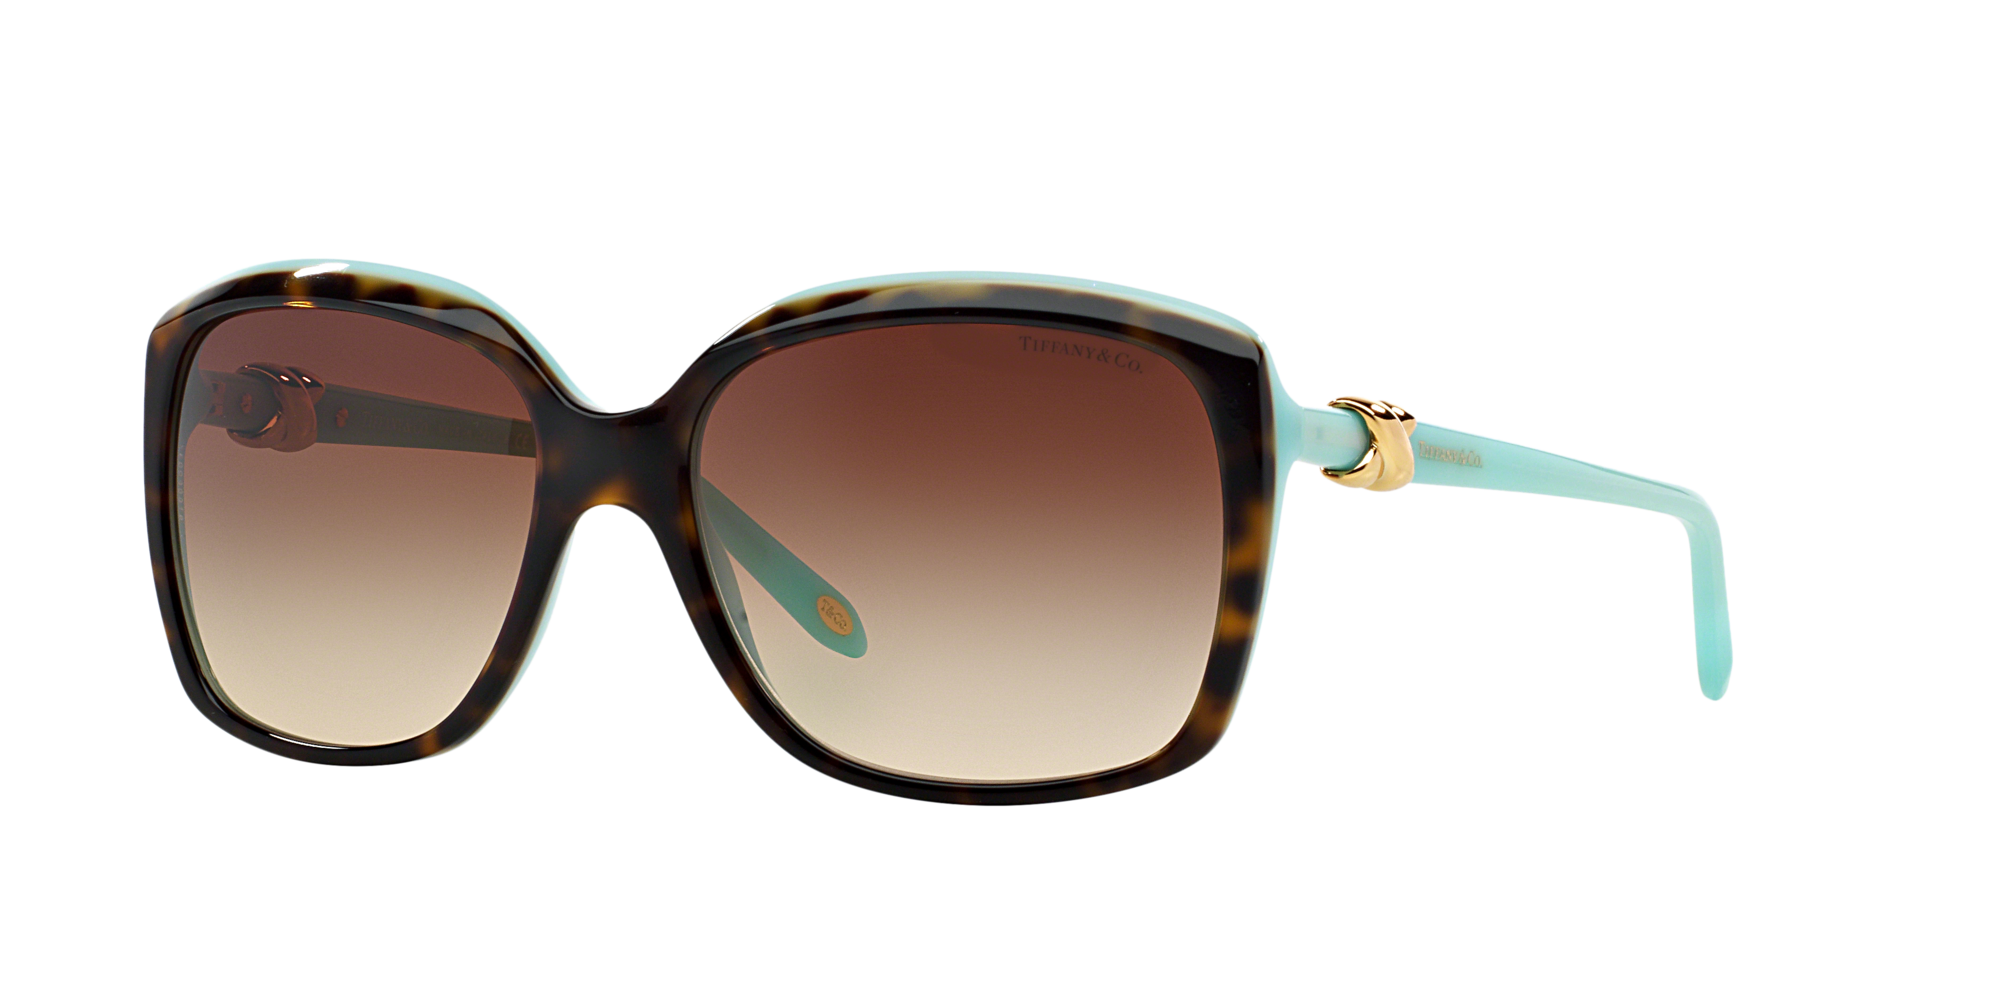 tiffany sunglasses uk sale